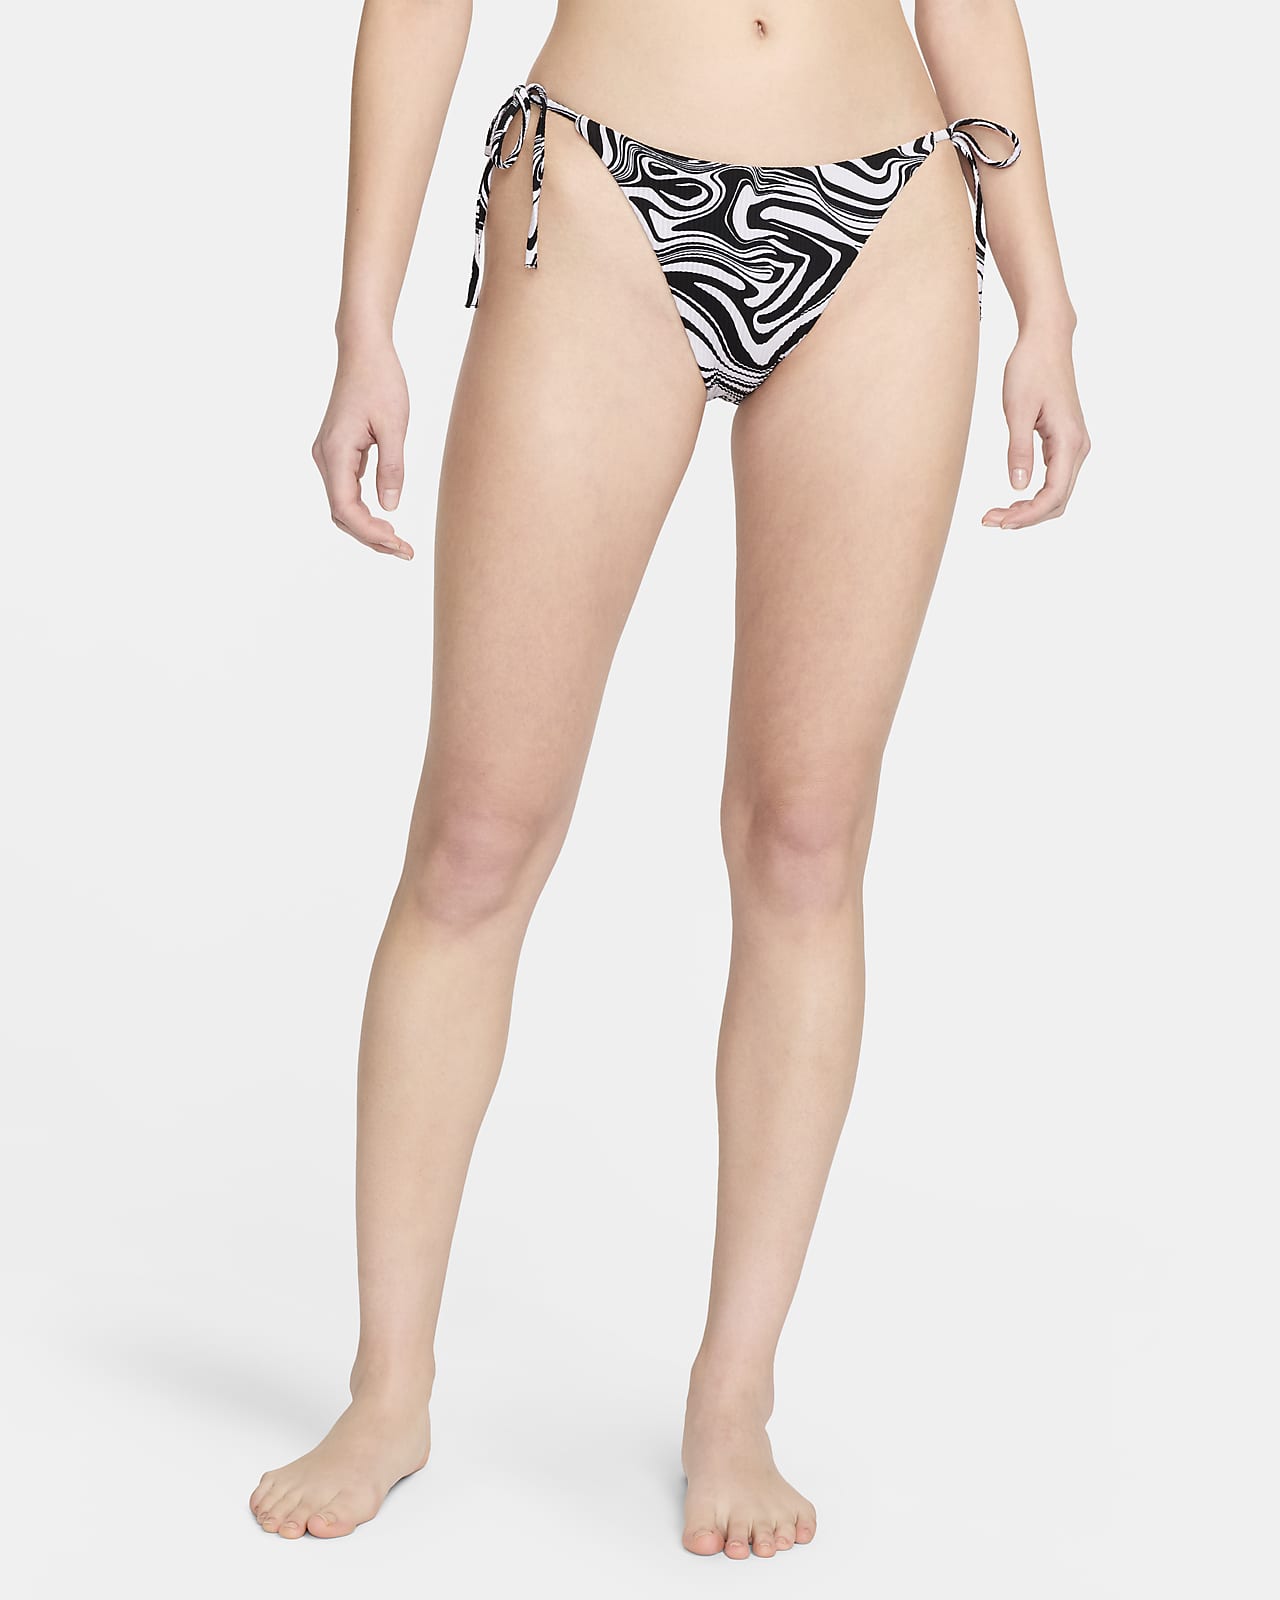 Nike Swim Swirl Women's String Bikini Bottom